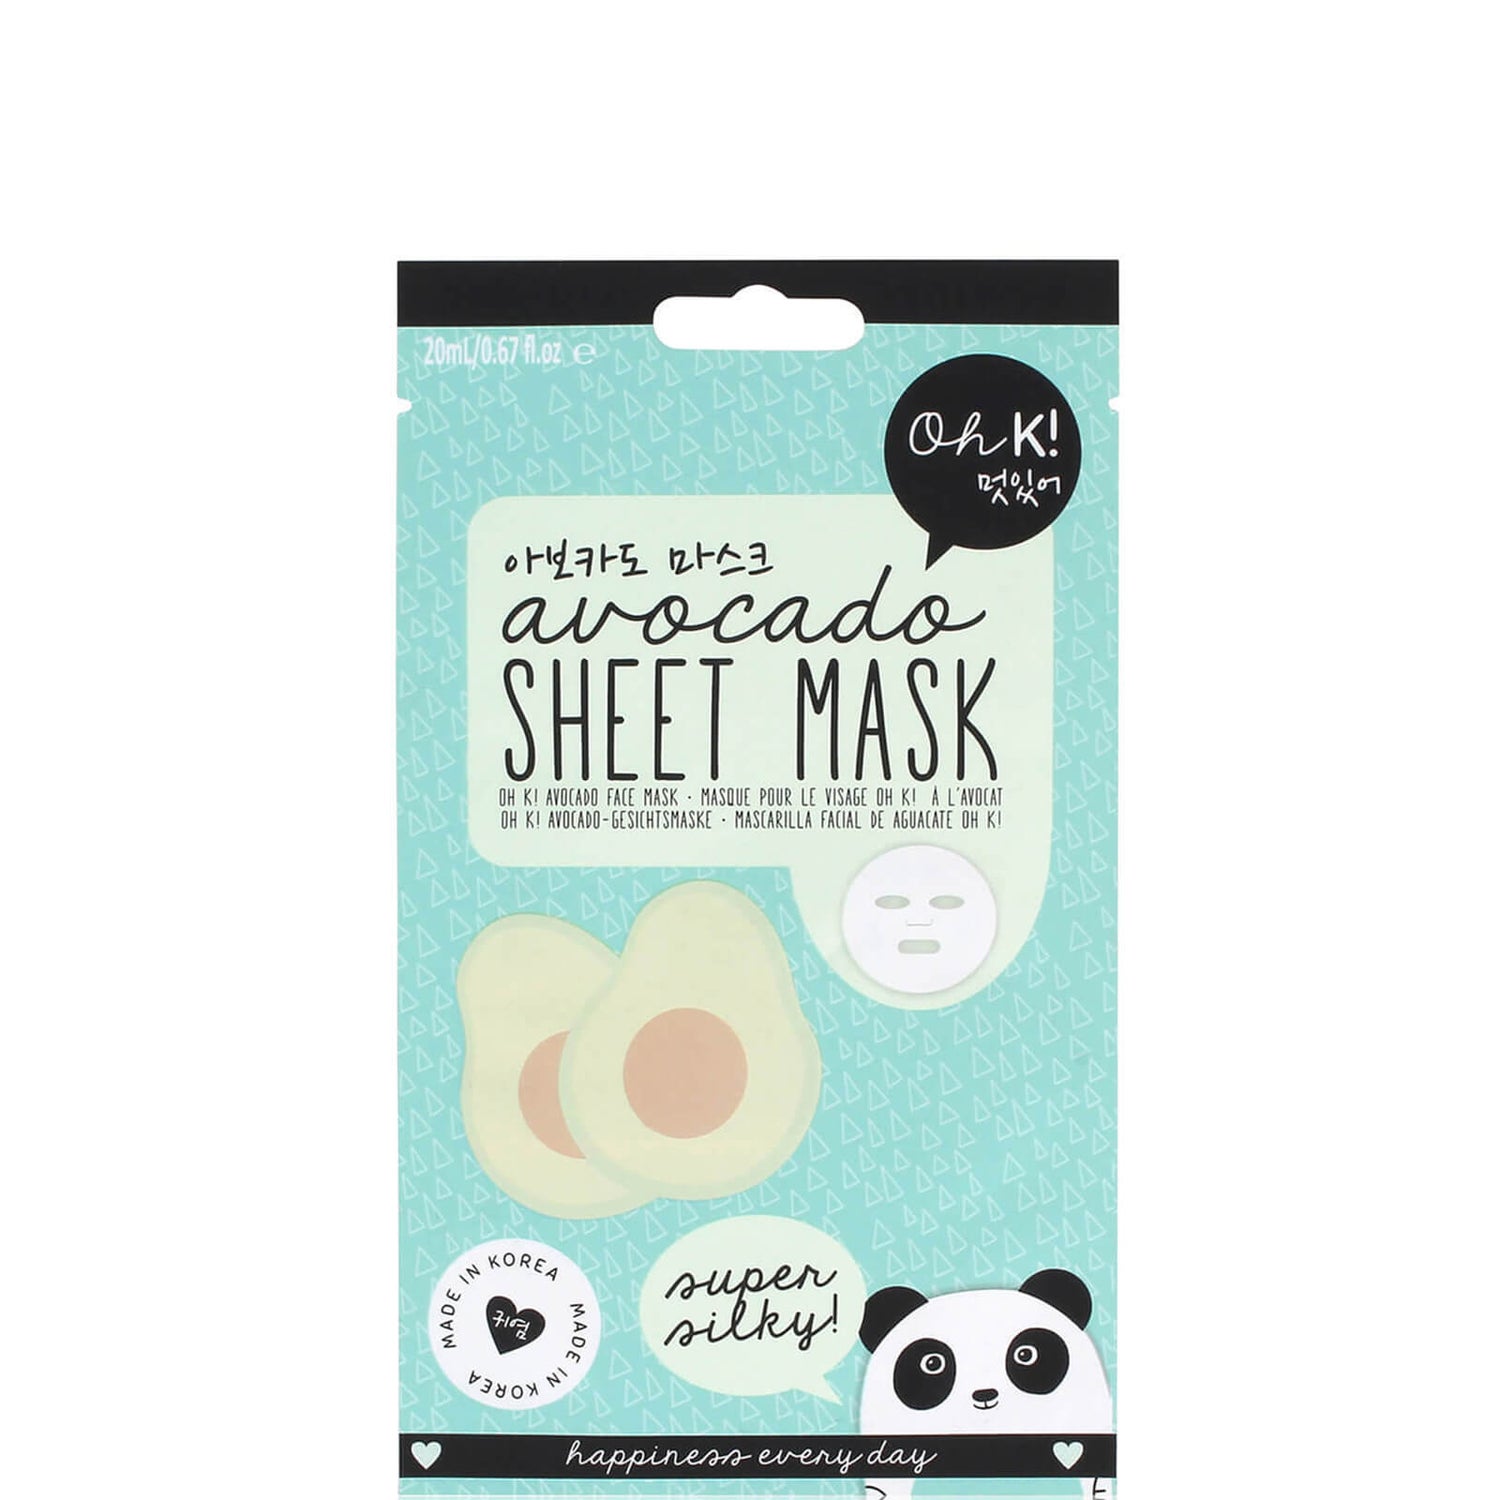 Oh K! Avocado Sheet Mask 23 ml